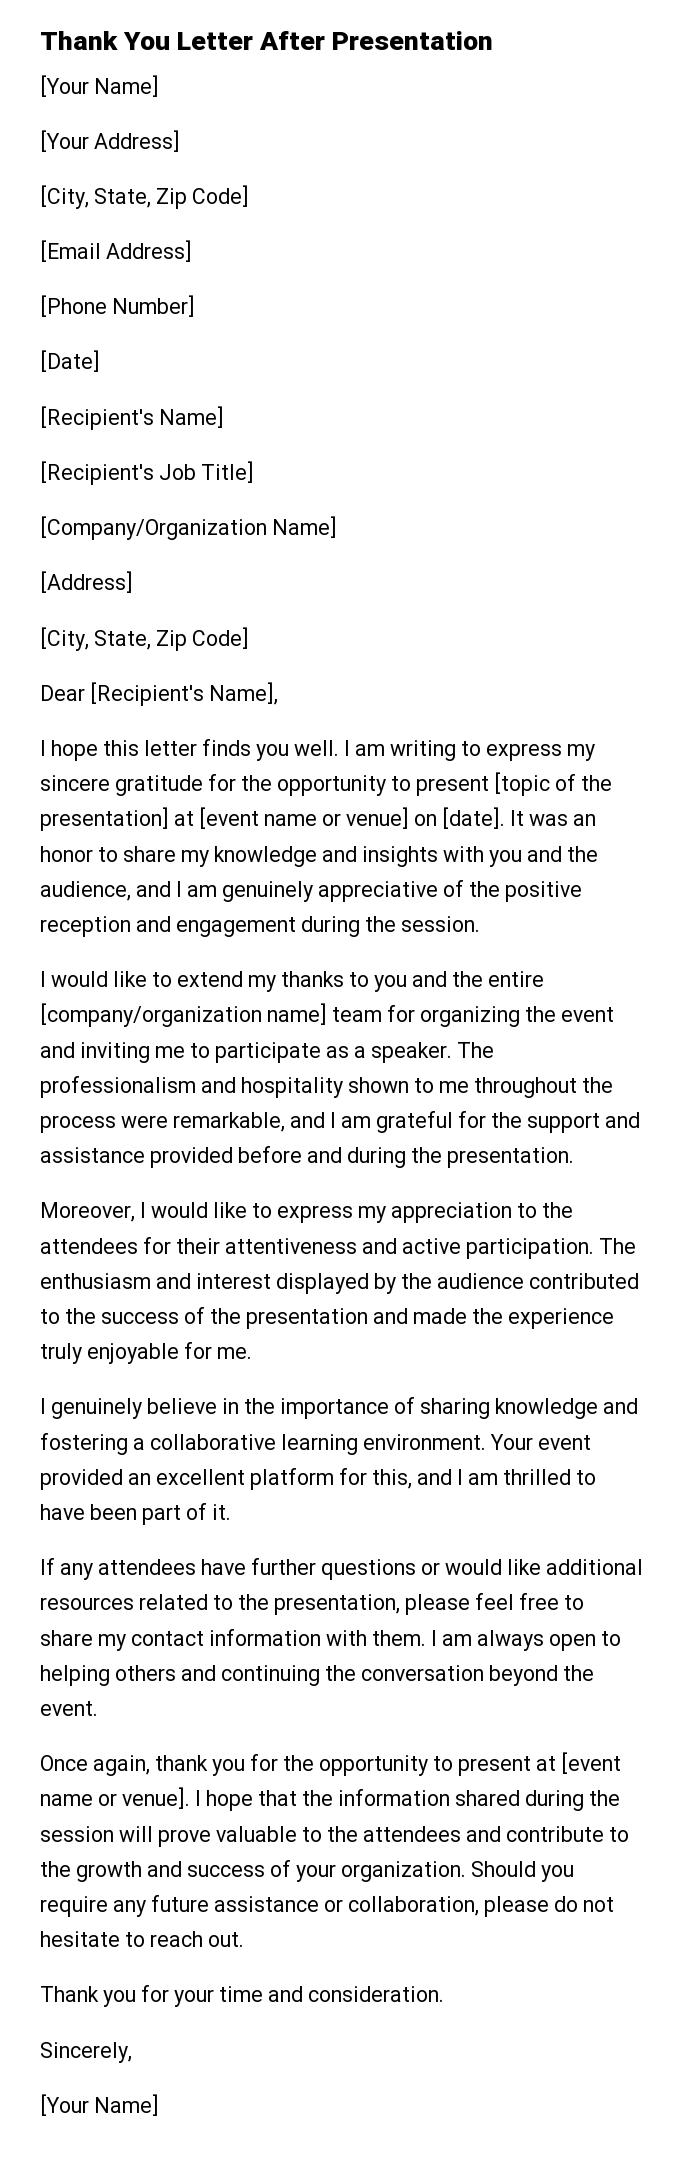 Thank You Letter After Presentation